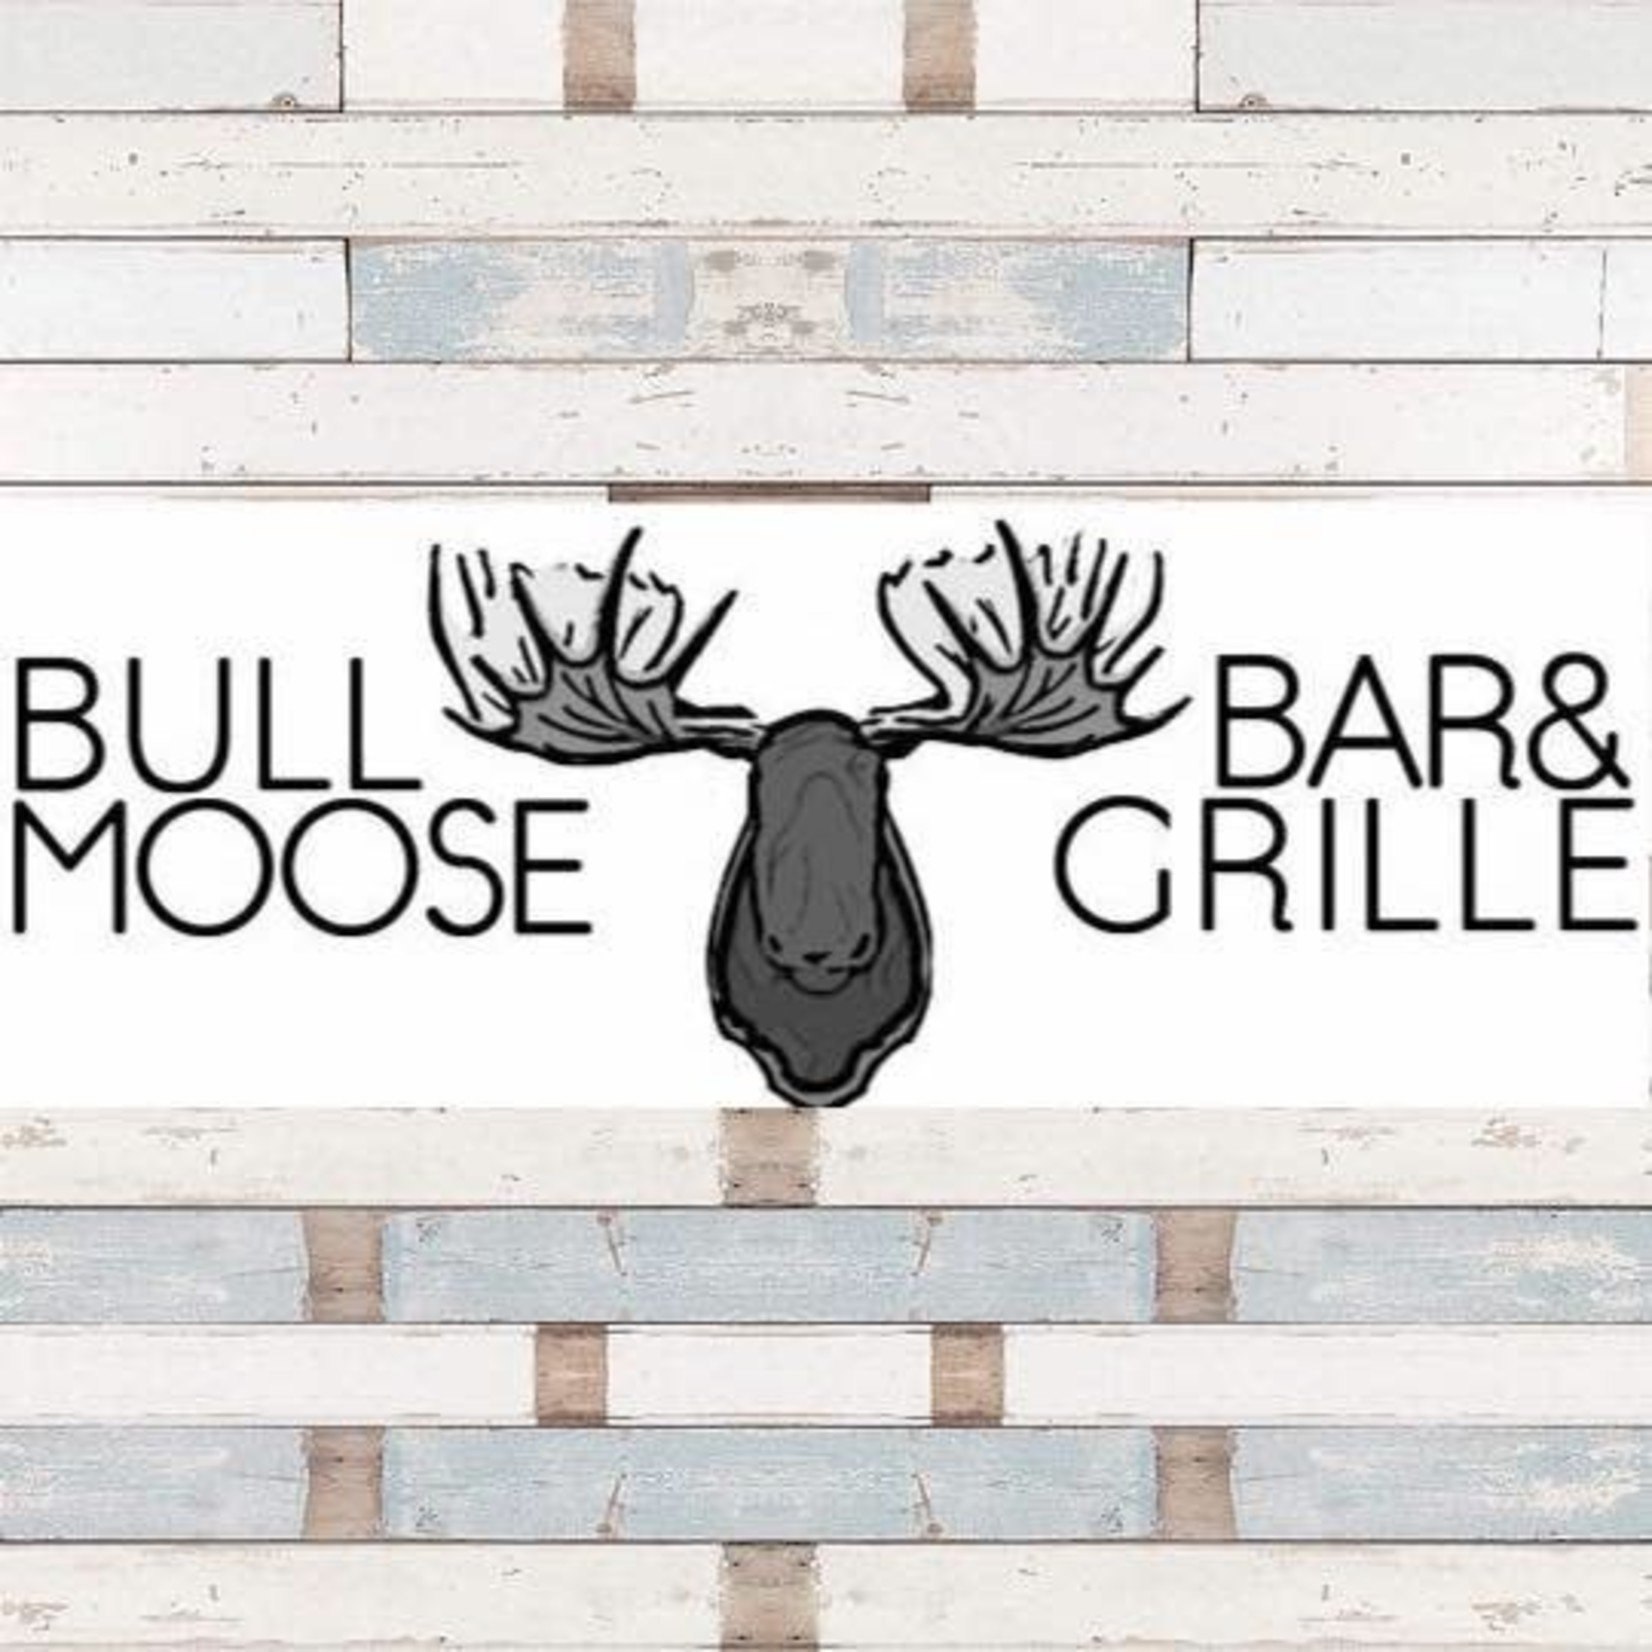 Bull Moose Bar & Grille-Sandwich Bull Moose Bar & Grille-Sandwich $20.00 Dining Certificate